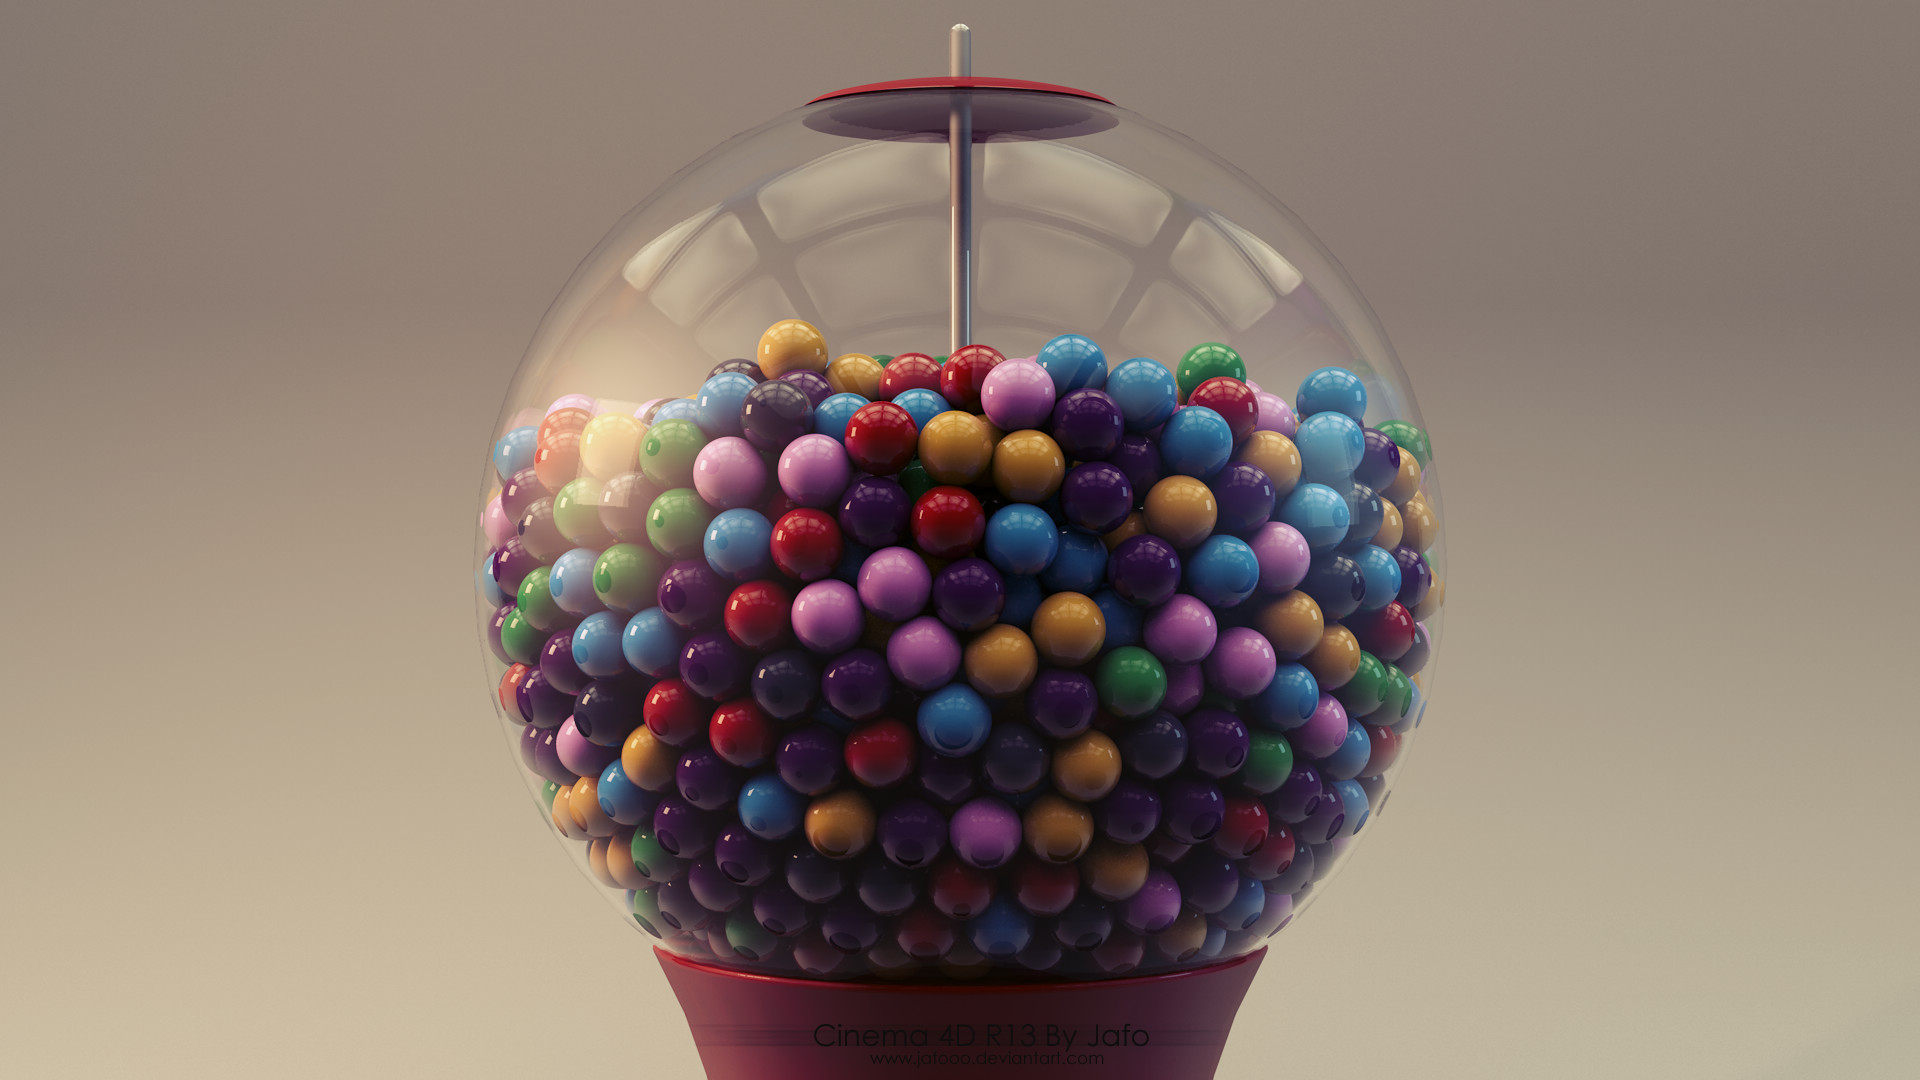 Gumball machine, candy machine, balls, candies, wallpaper HD, wallpapers. Design